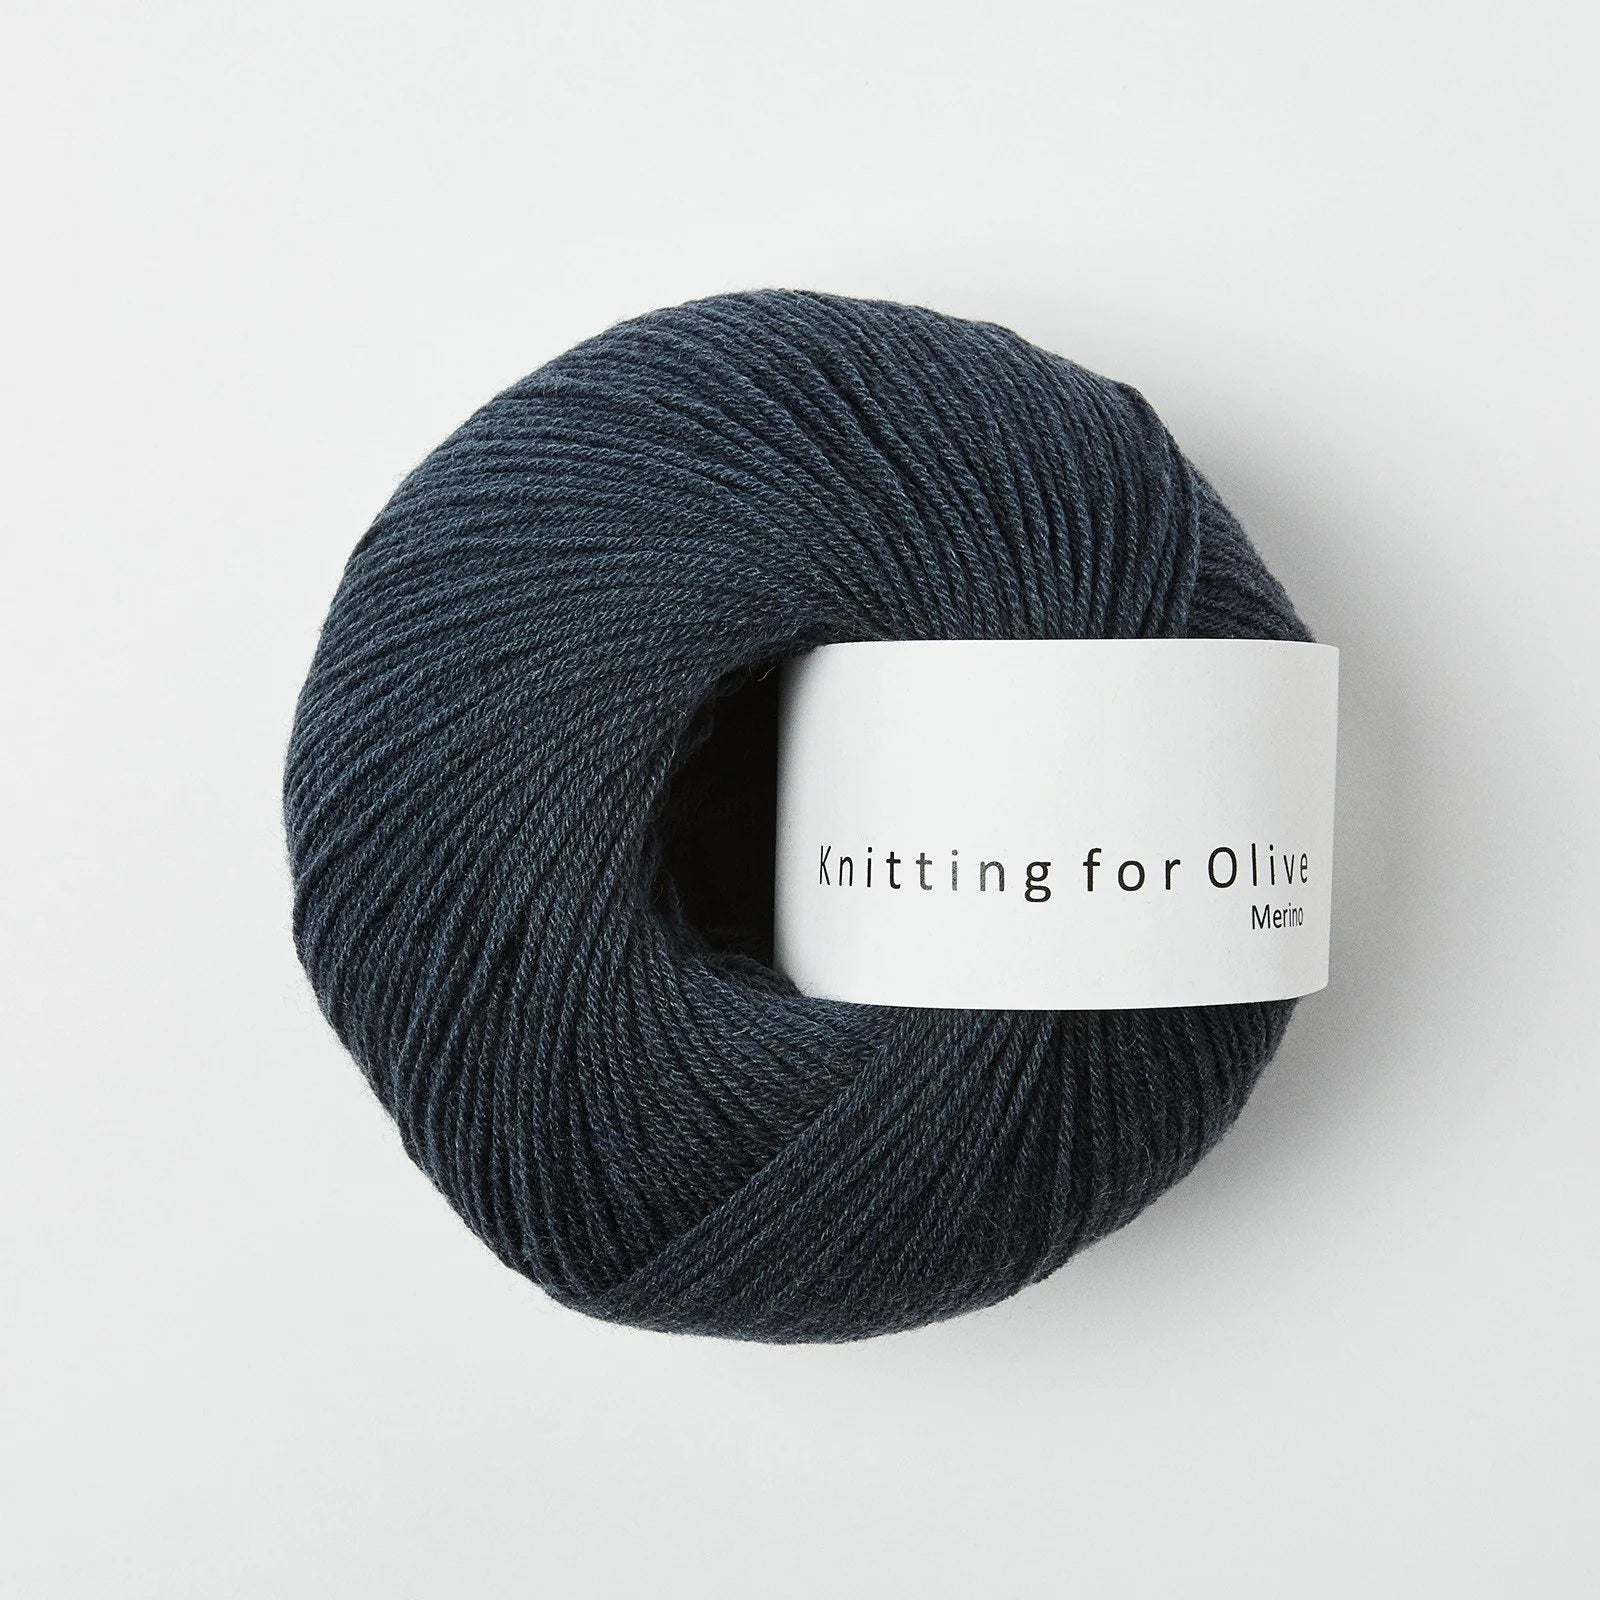 Knitting for Olive Merino - Knitting for Olive - Deep Petroleum Blue - The Little Yarn Store